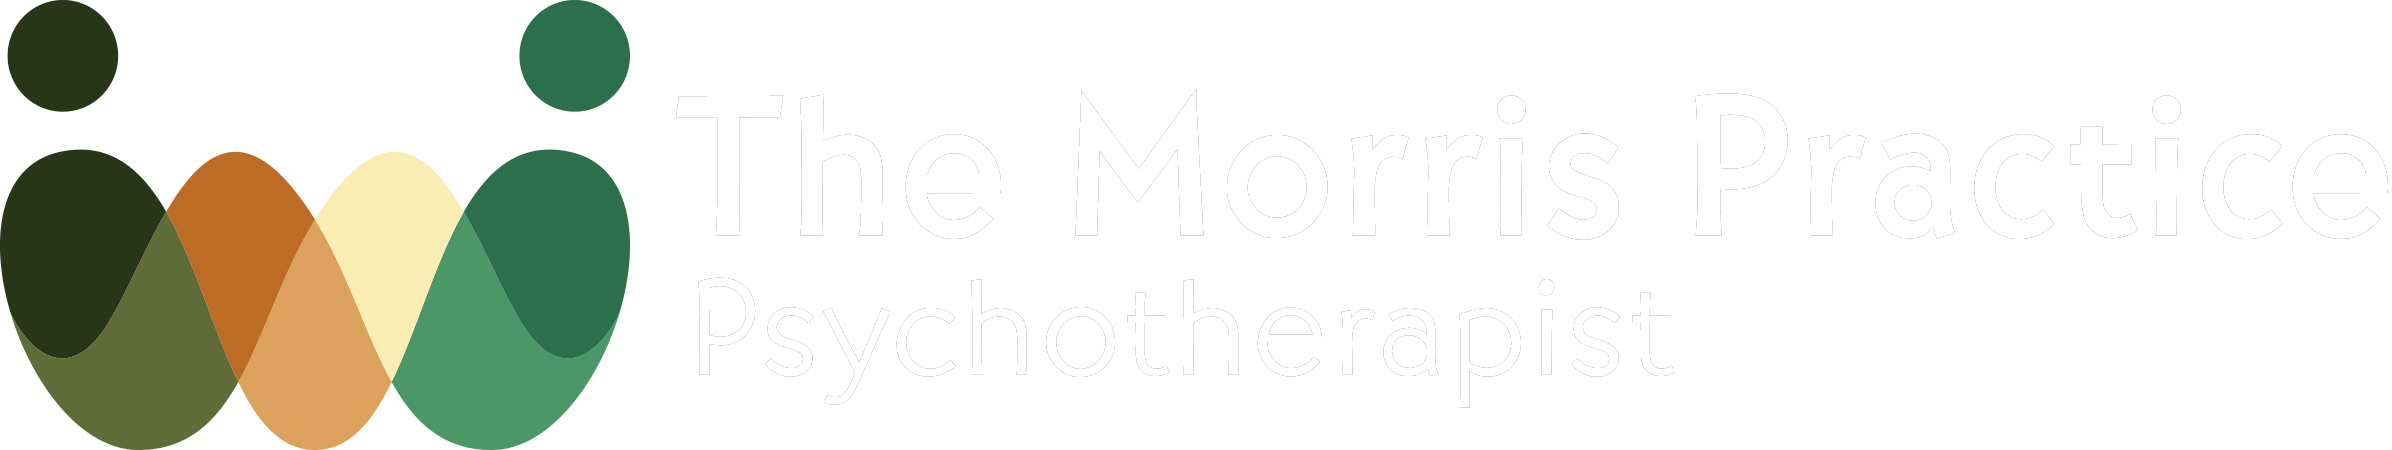 The Morris Practice logo